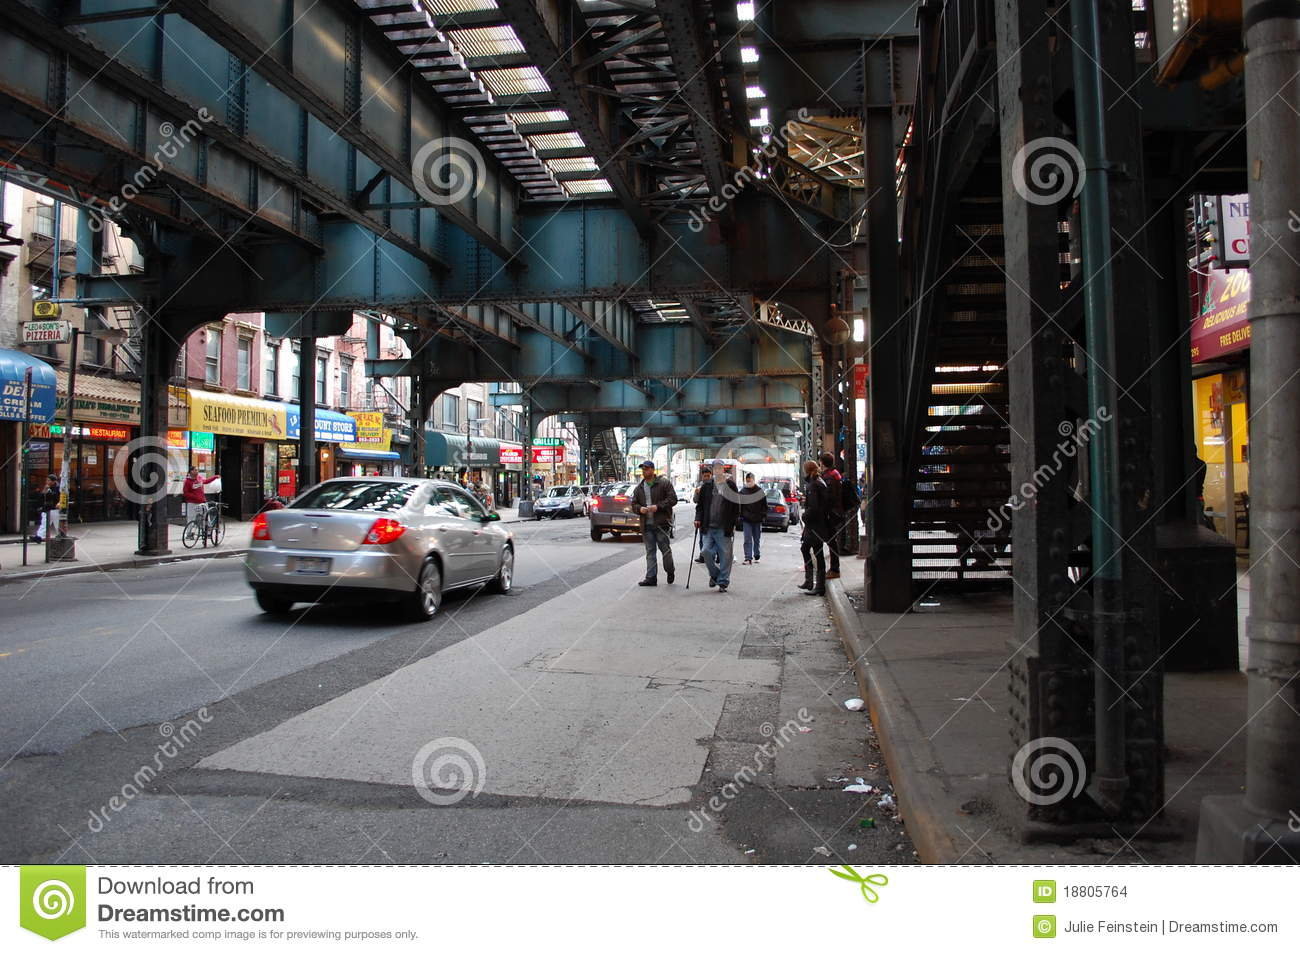 under-elevated-train-new-york-city-18805764.jpg